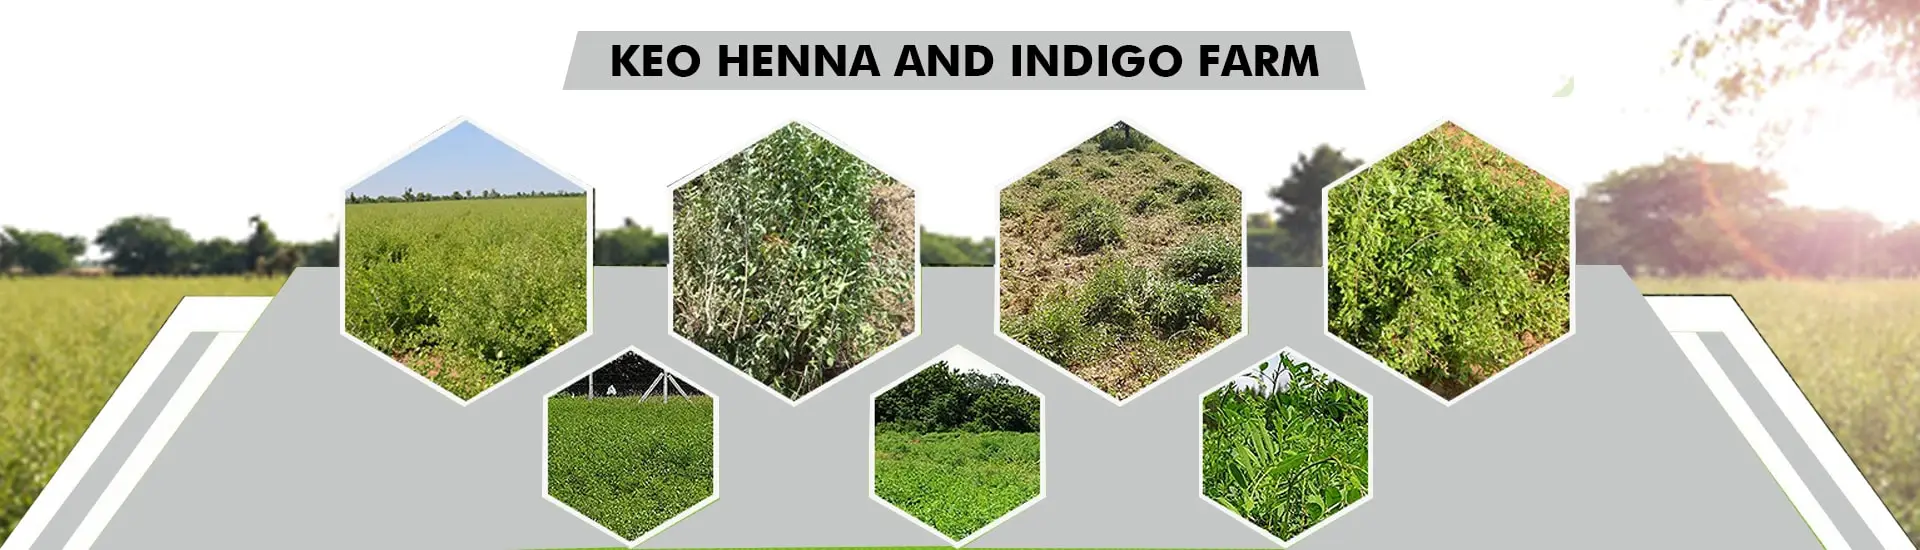 Keo Henna and Indigo Farm